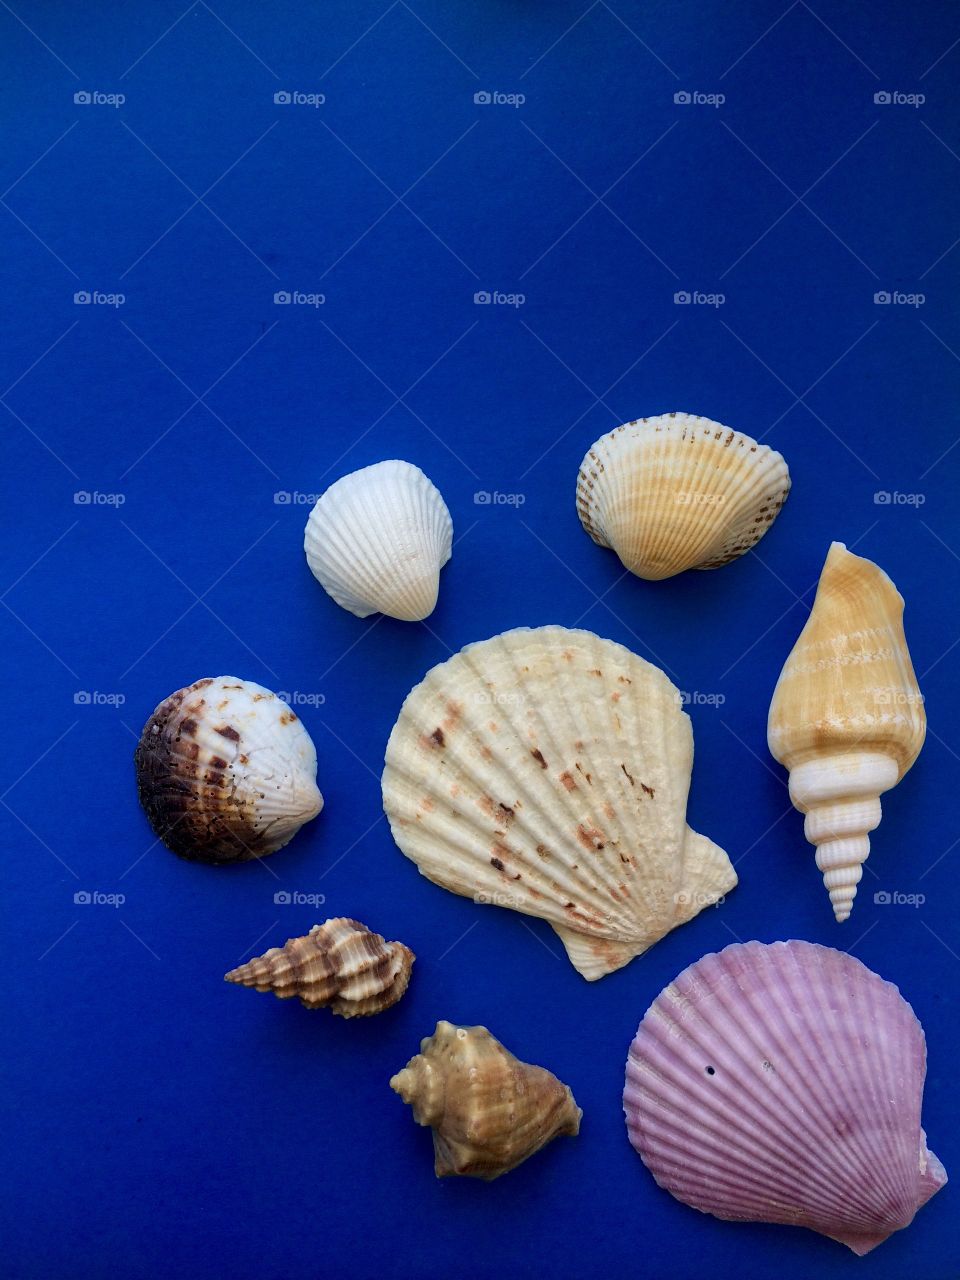 Arrangement of seashells on blue background